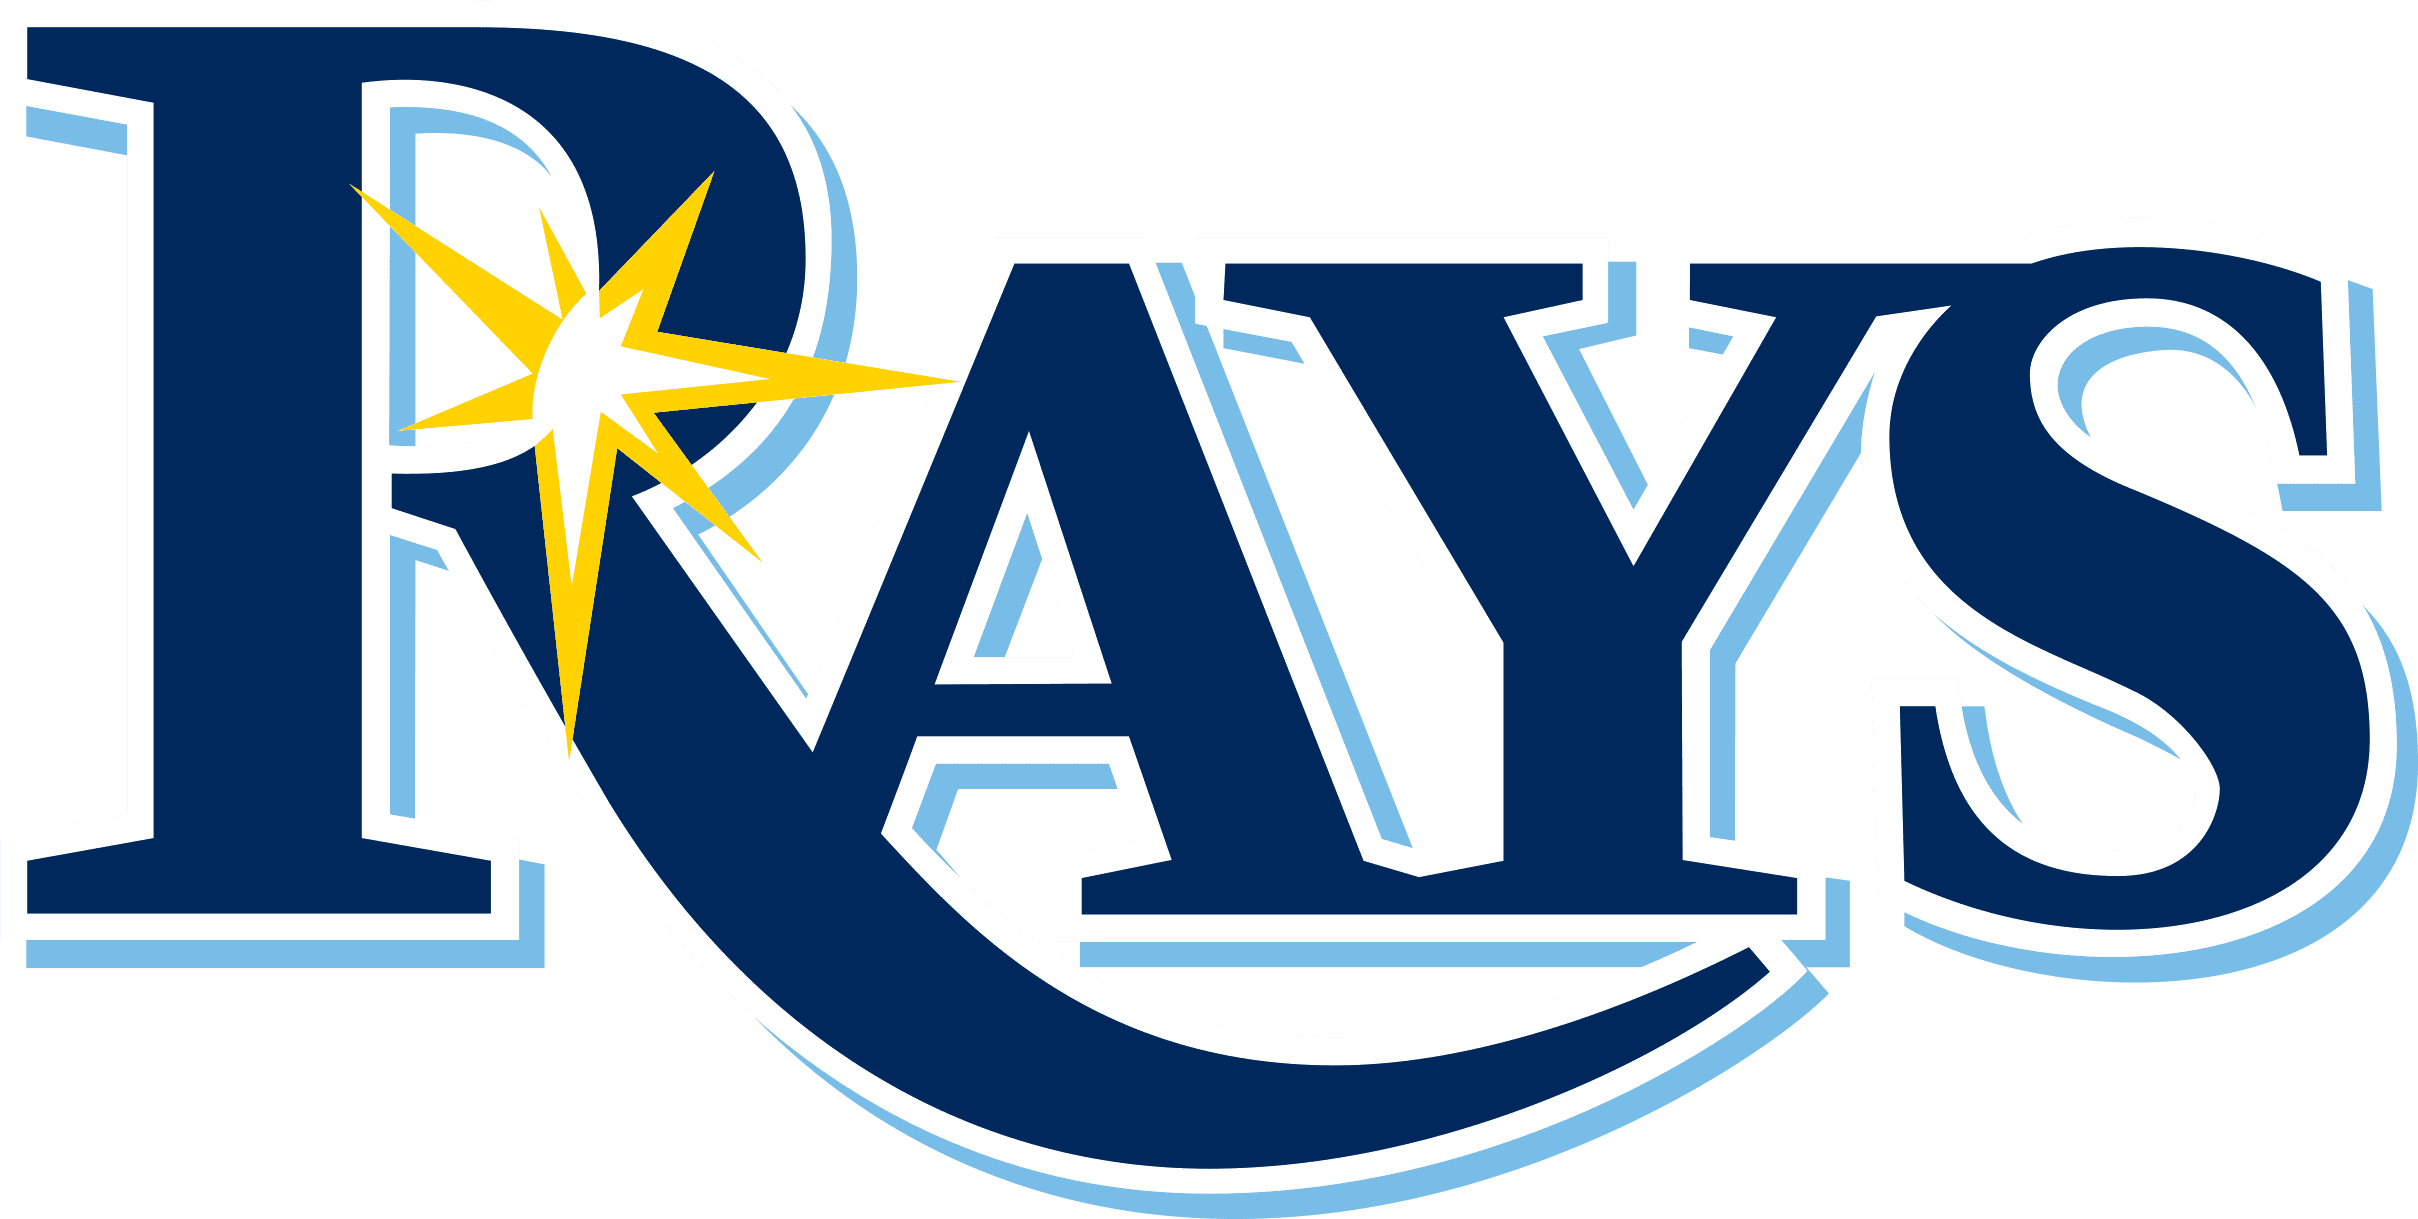 12 Styles MLB Tampa Bay Rays Svg, Tampa Bay Rays Svg, Tampa Bay